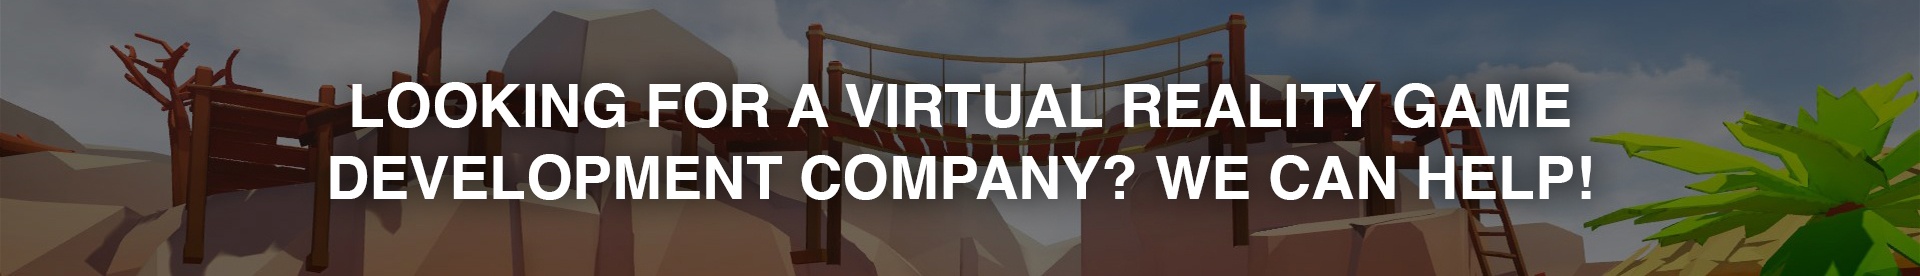 VR game development company